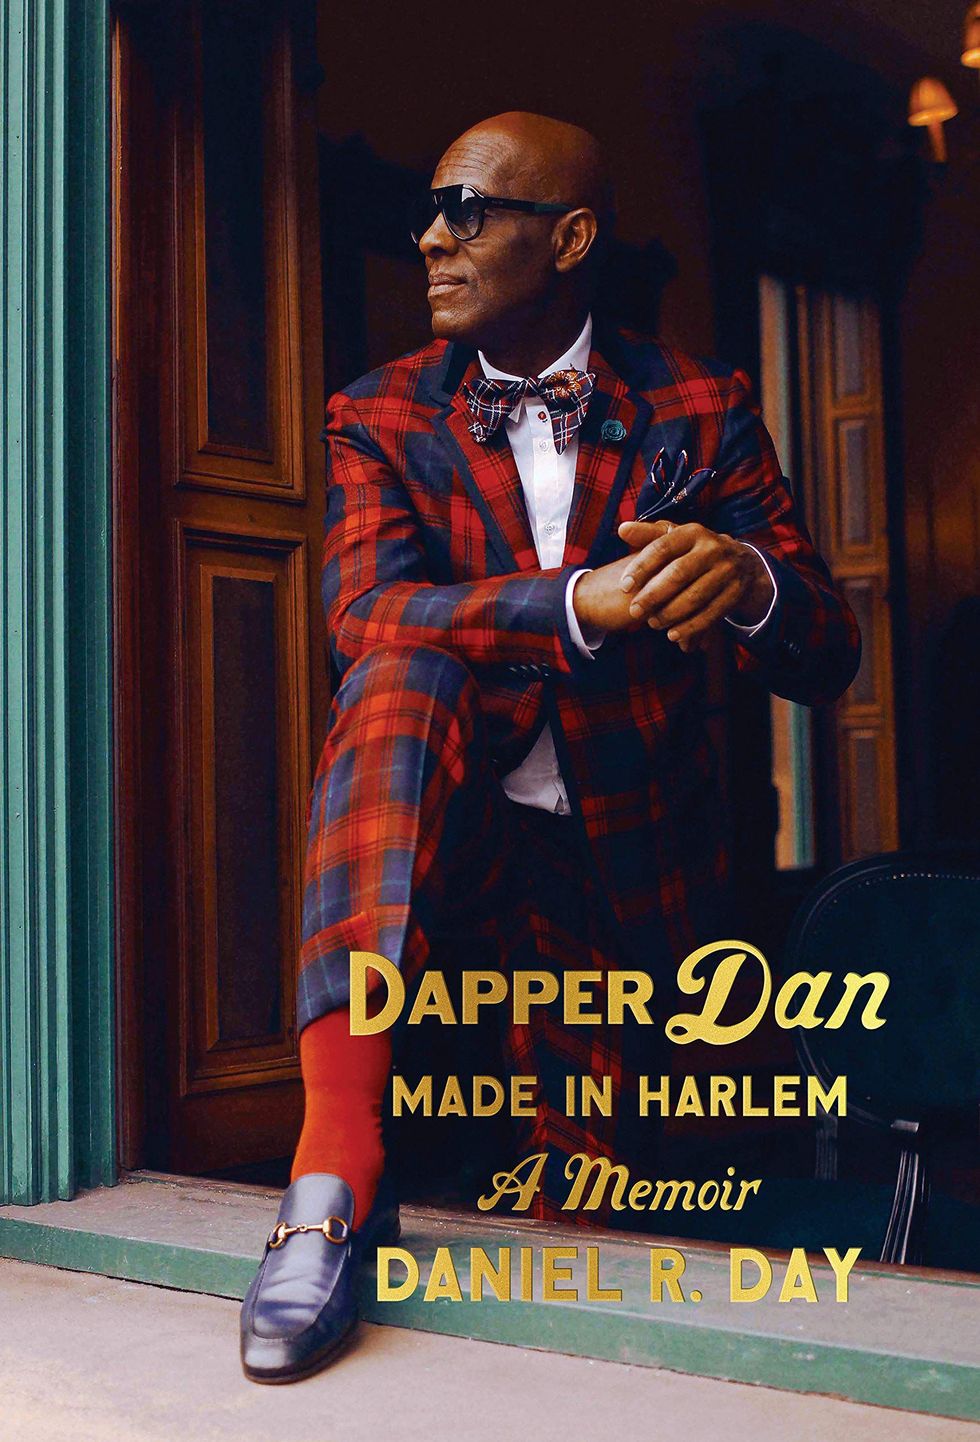 Made For Dapper Dan Harlem Jacket And Duffel Bag: Not For Resale